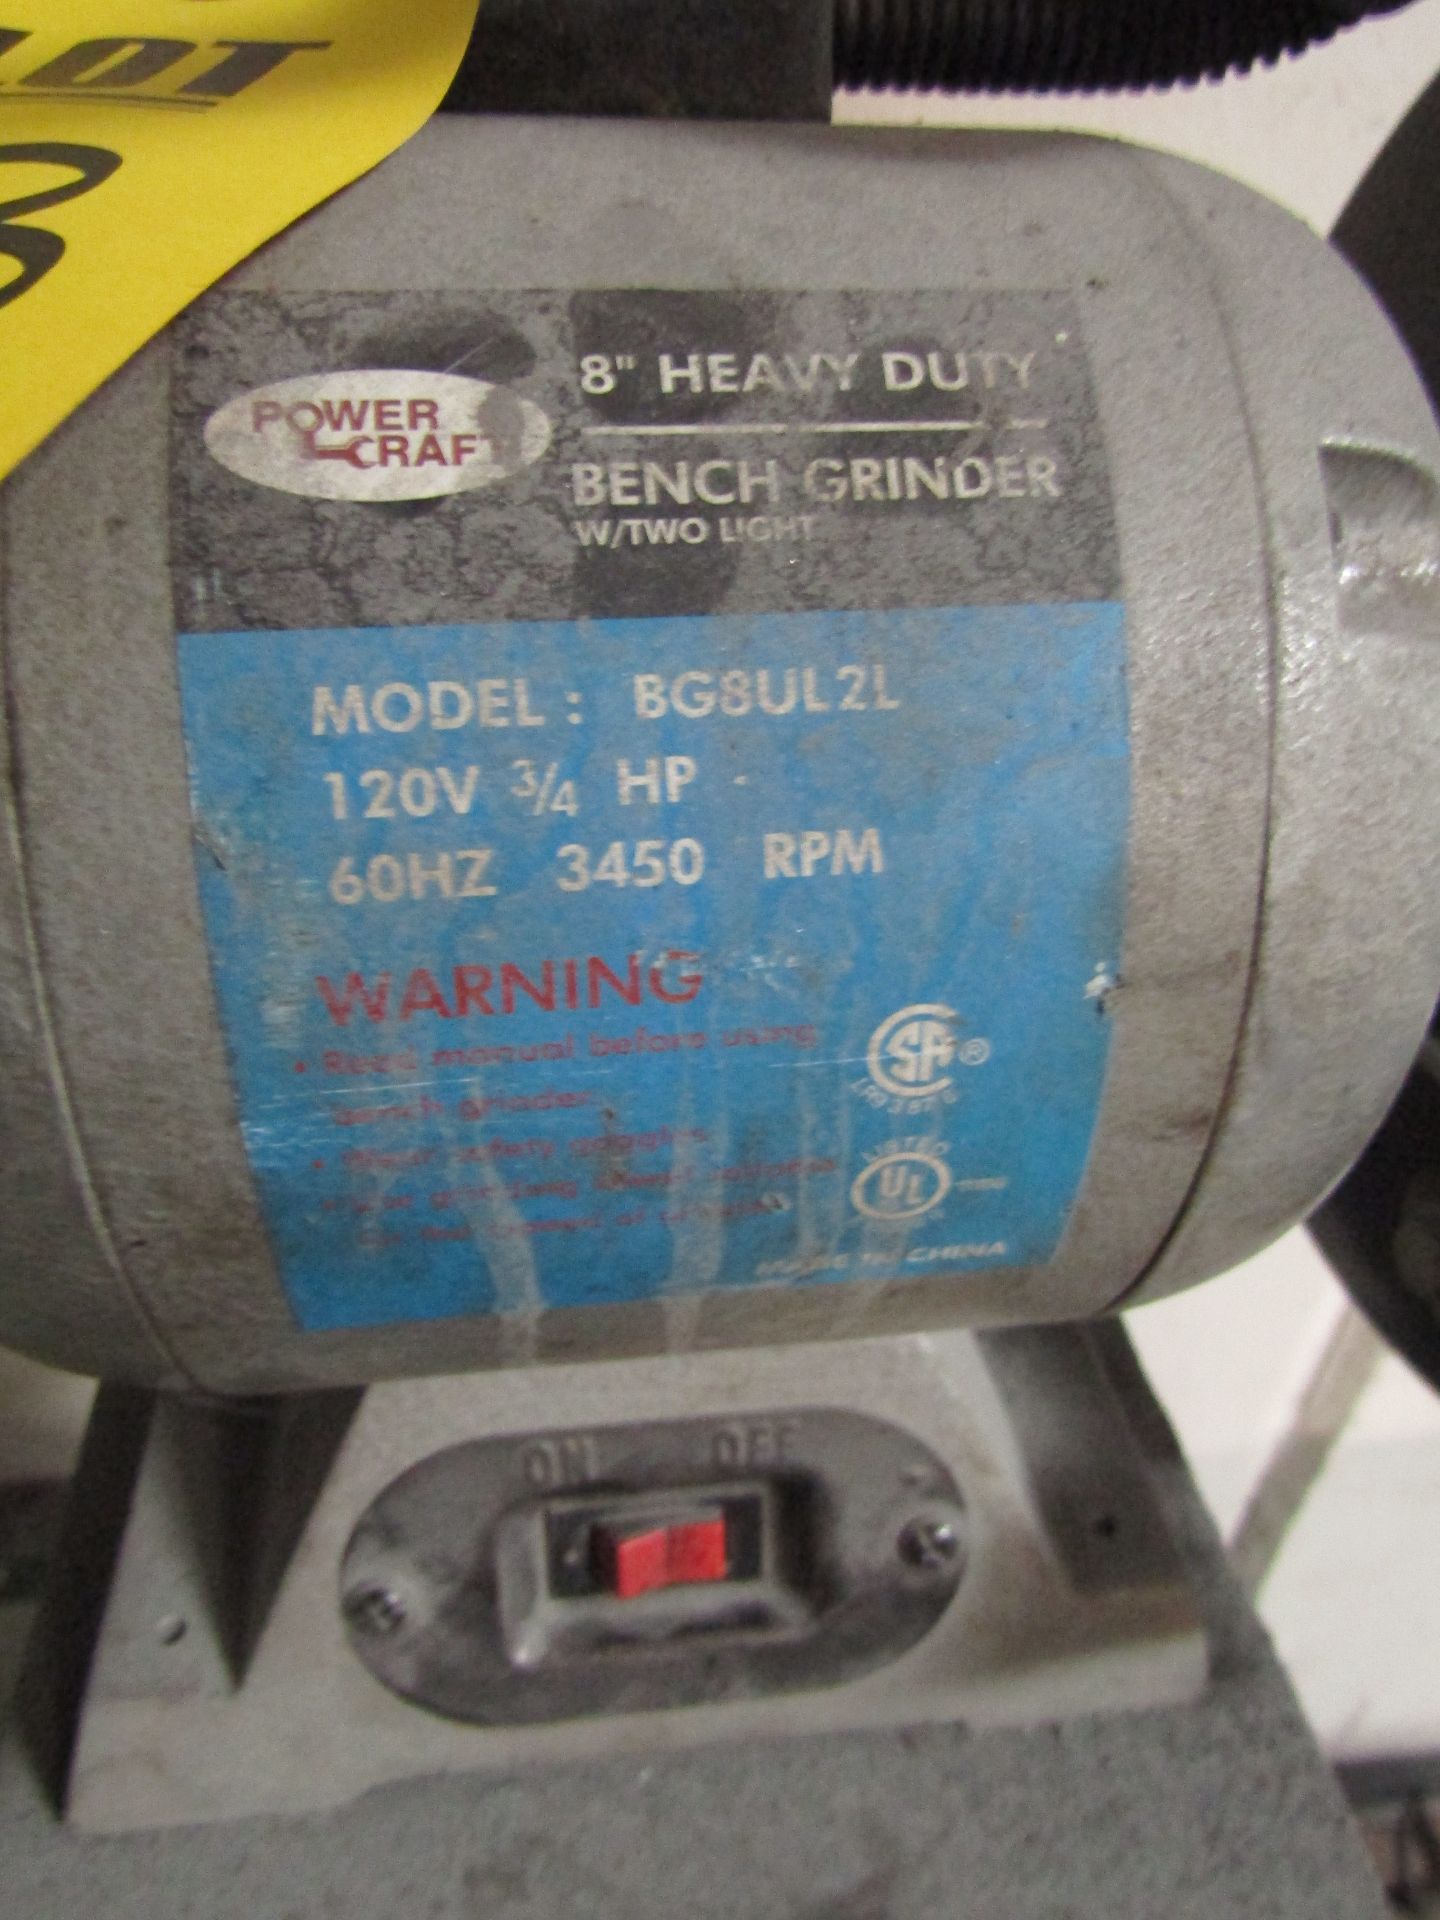 POWERCRAFT 8" Heavy Duty Pedestal Grinder, Model BG8UL2L, 120 V, 3/4 HP, 60 HZ, 3450 RPM